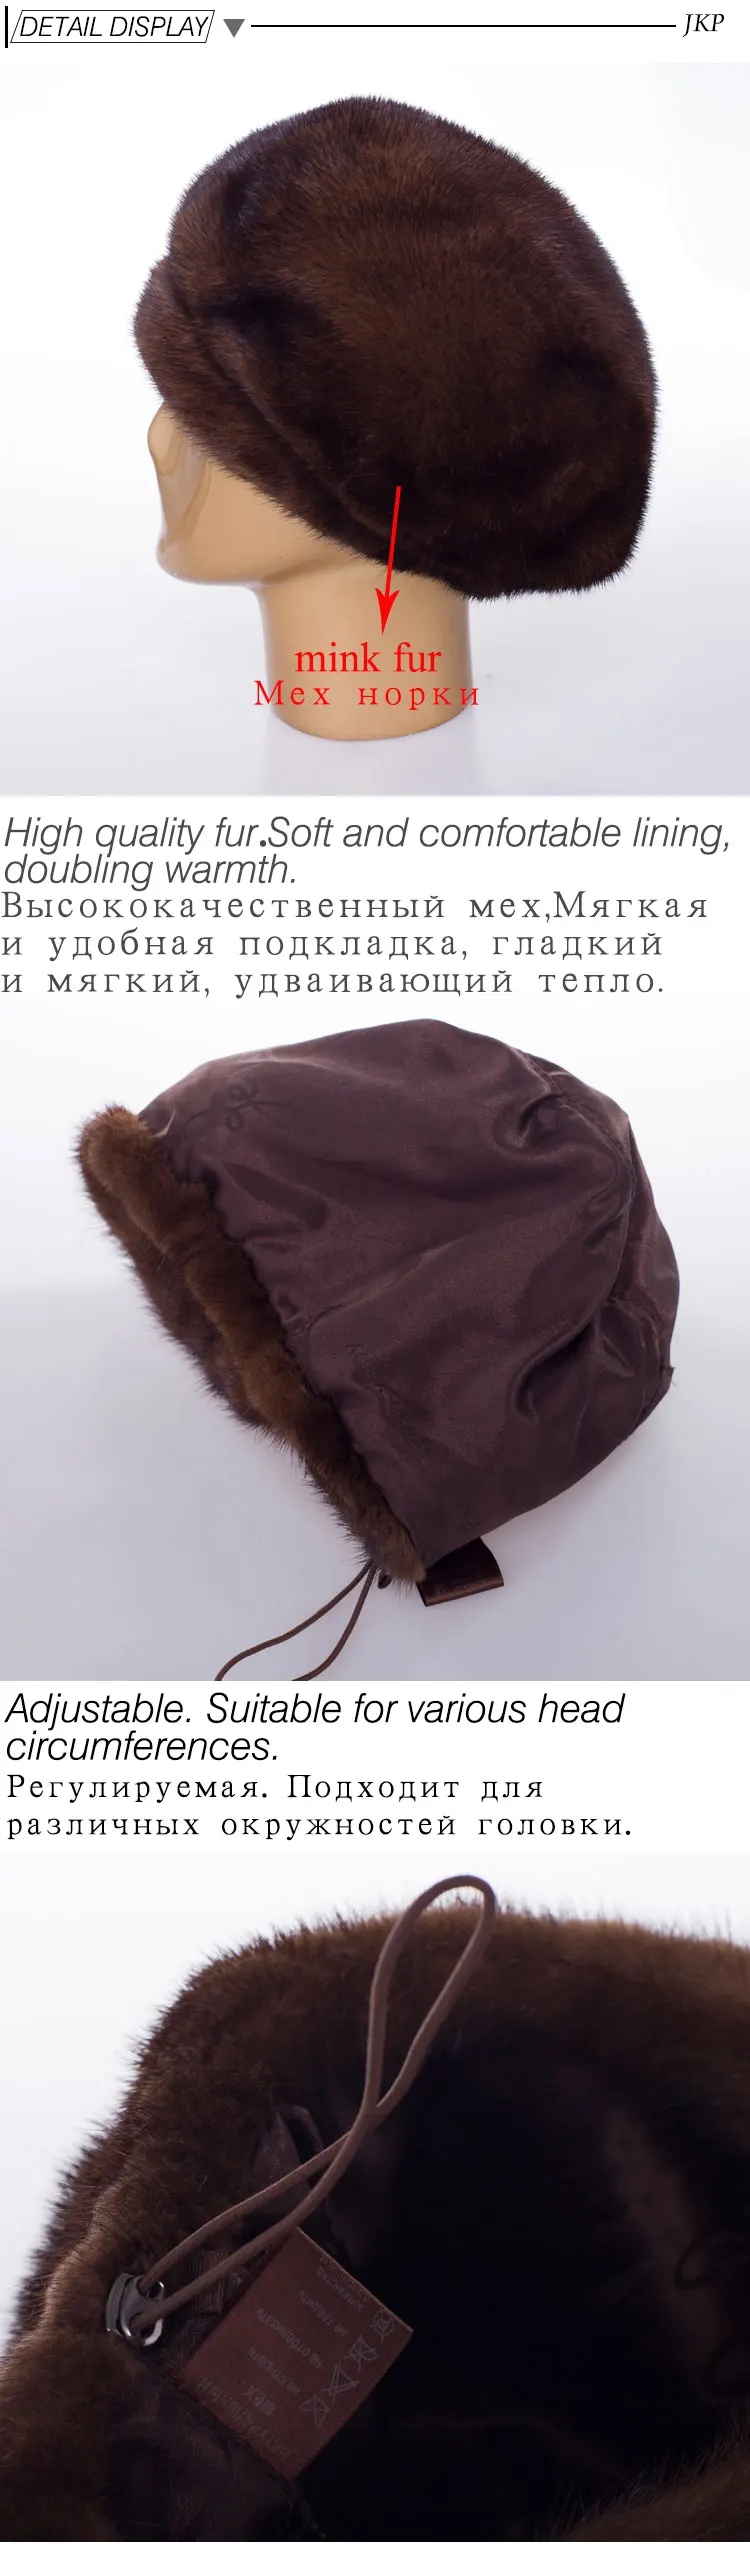 100%Natural Mink Fur Women's Hat Fashion Hat Women's Solid Cap Bomb Cap Women's Warm Earmuffs Discount Winter Hot DHY18-18